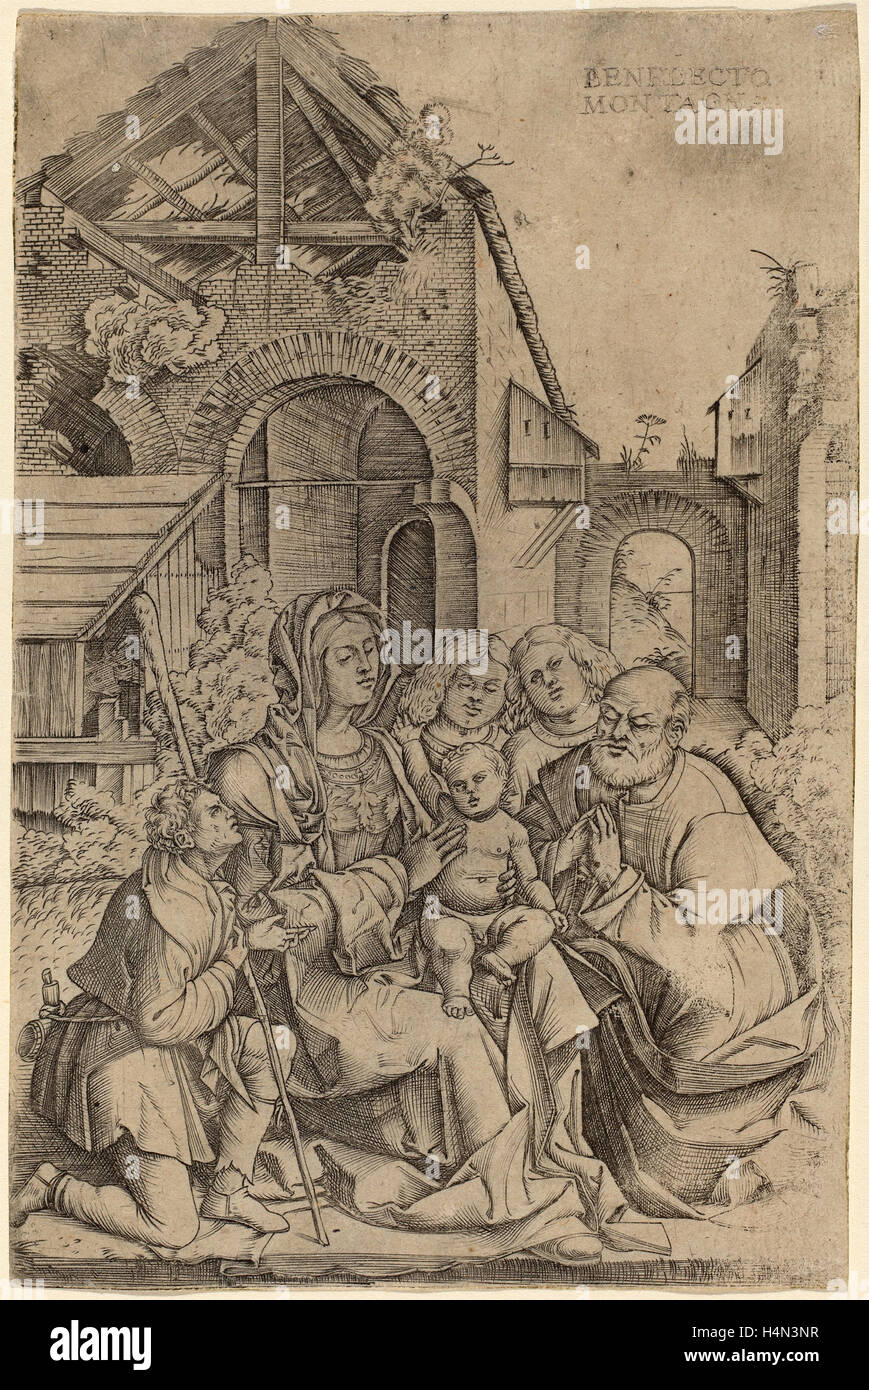 Benedetto Montagna (Italian, c. 1480 - 1555 or 1558), The Nativity, c. 1507, engraving Stock Photo